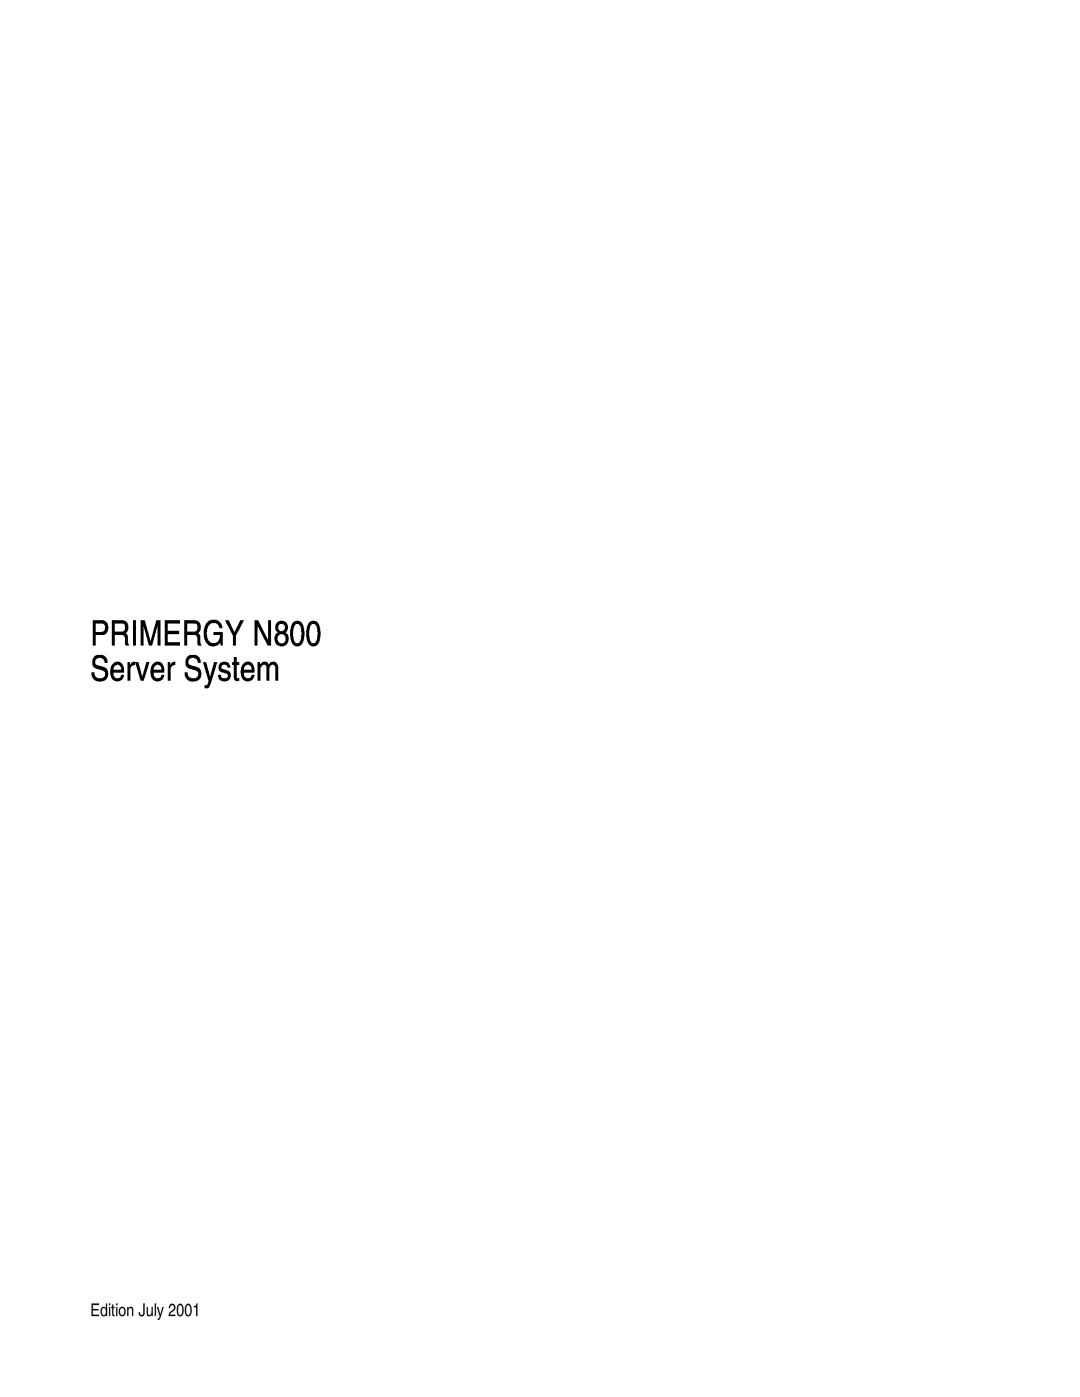 Fujitsu manual PRIMERGY N800 Server System, Edition July 